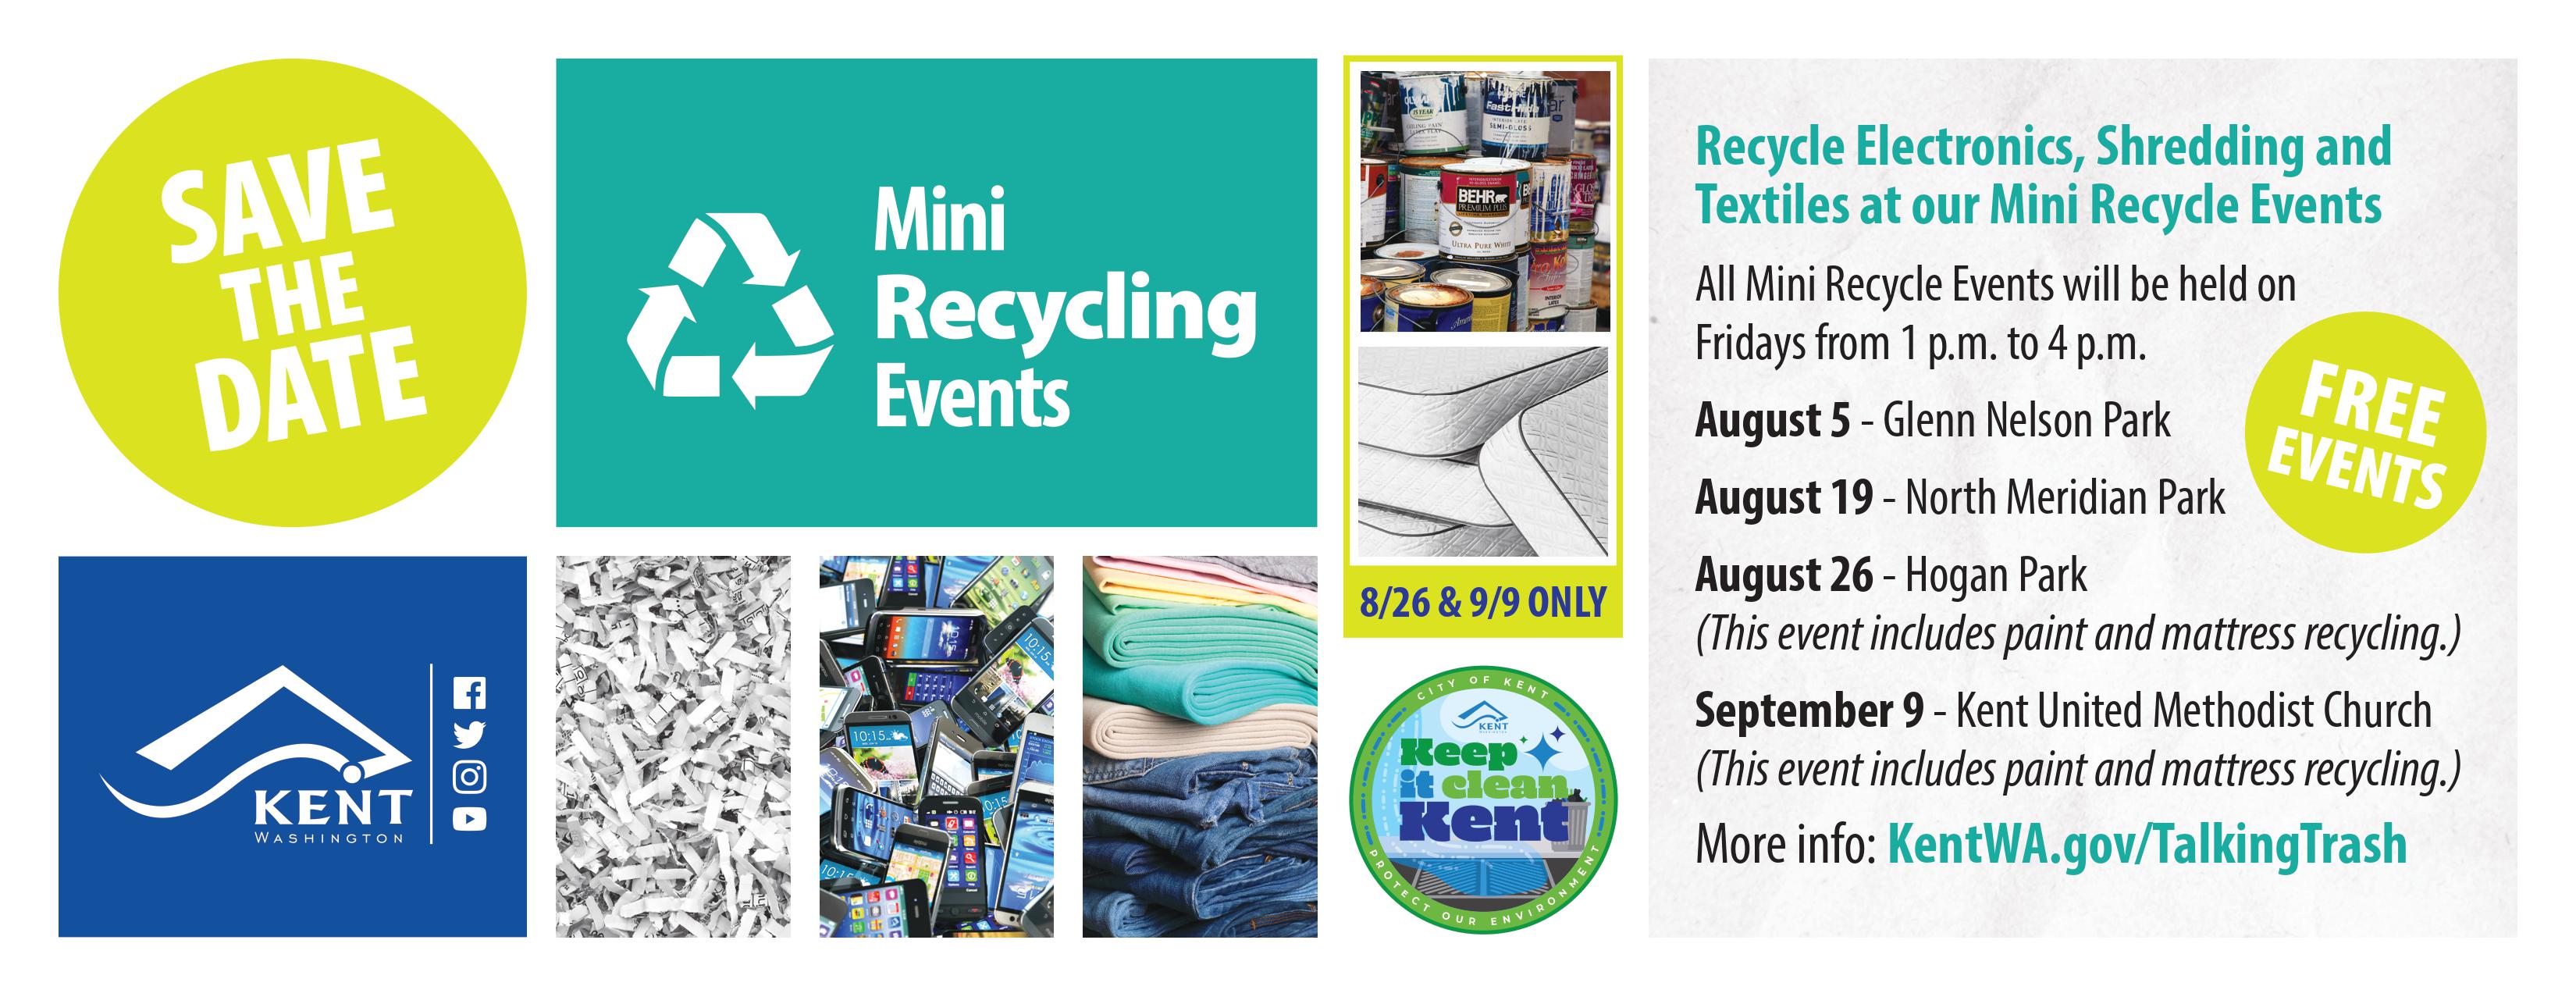 Mini Recycling Event 2022, Kent, Washington, United States